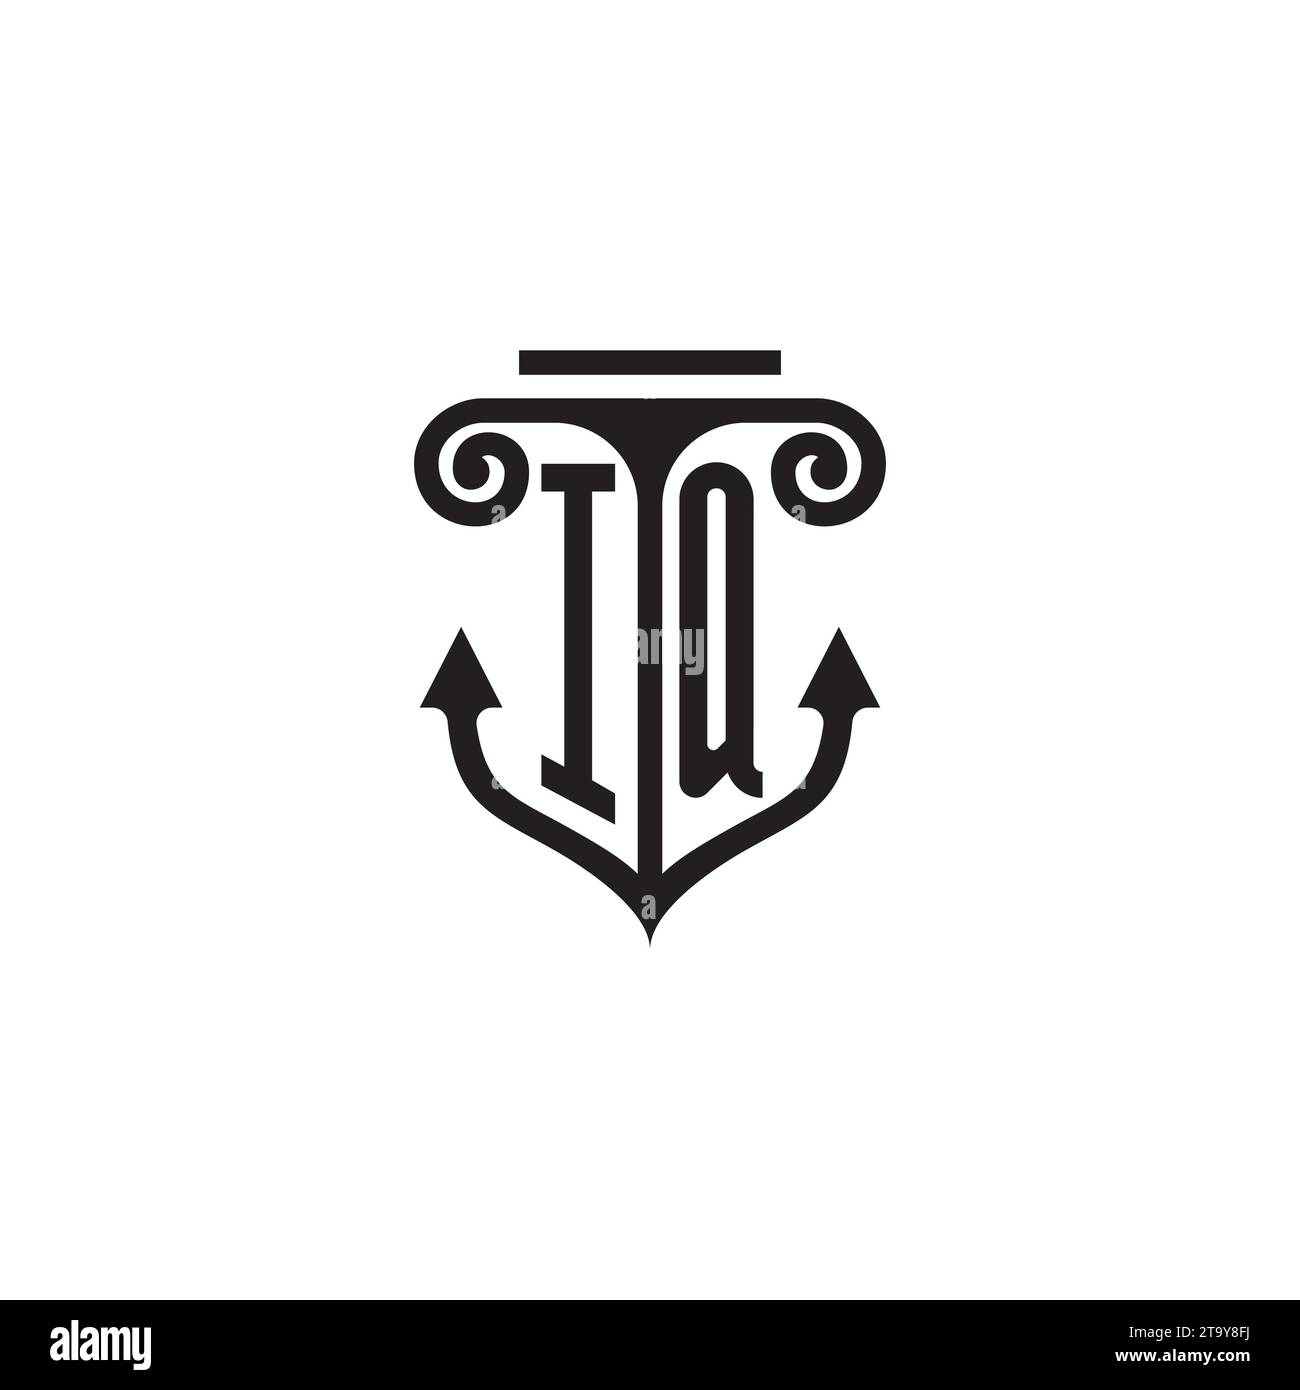 IQ pillar and anchor combination concept logo in high quality design Stock Vector